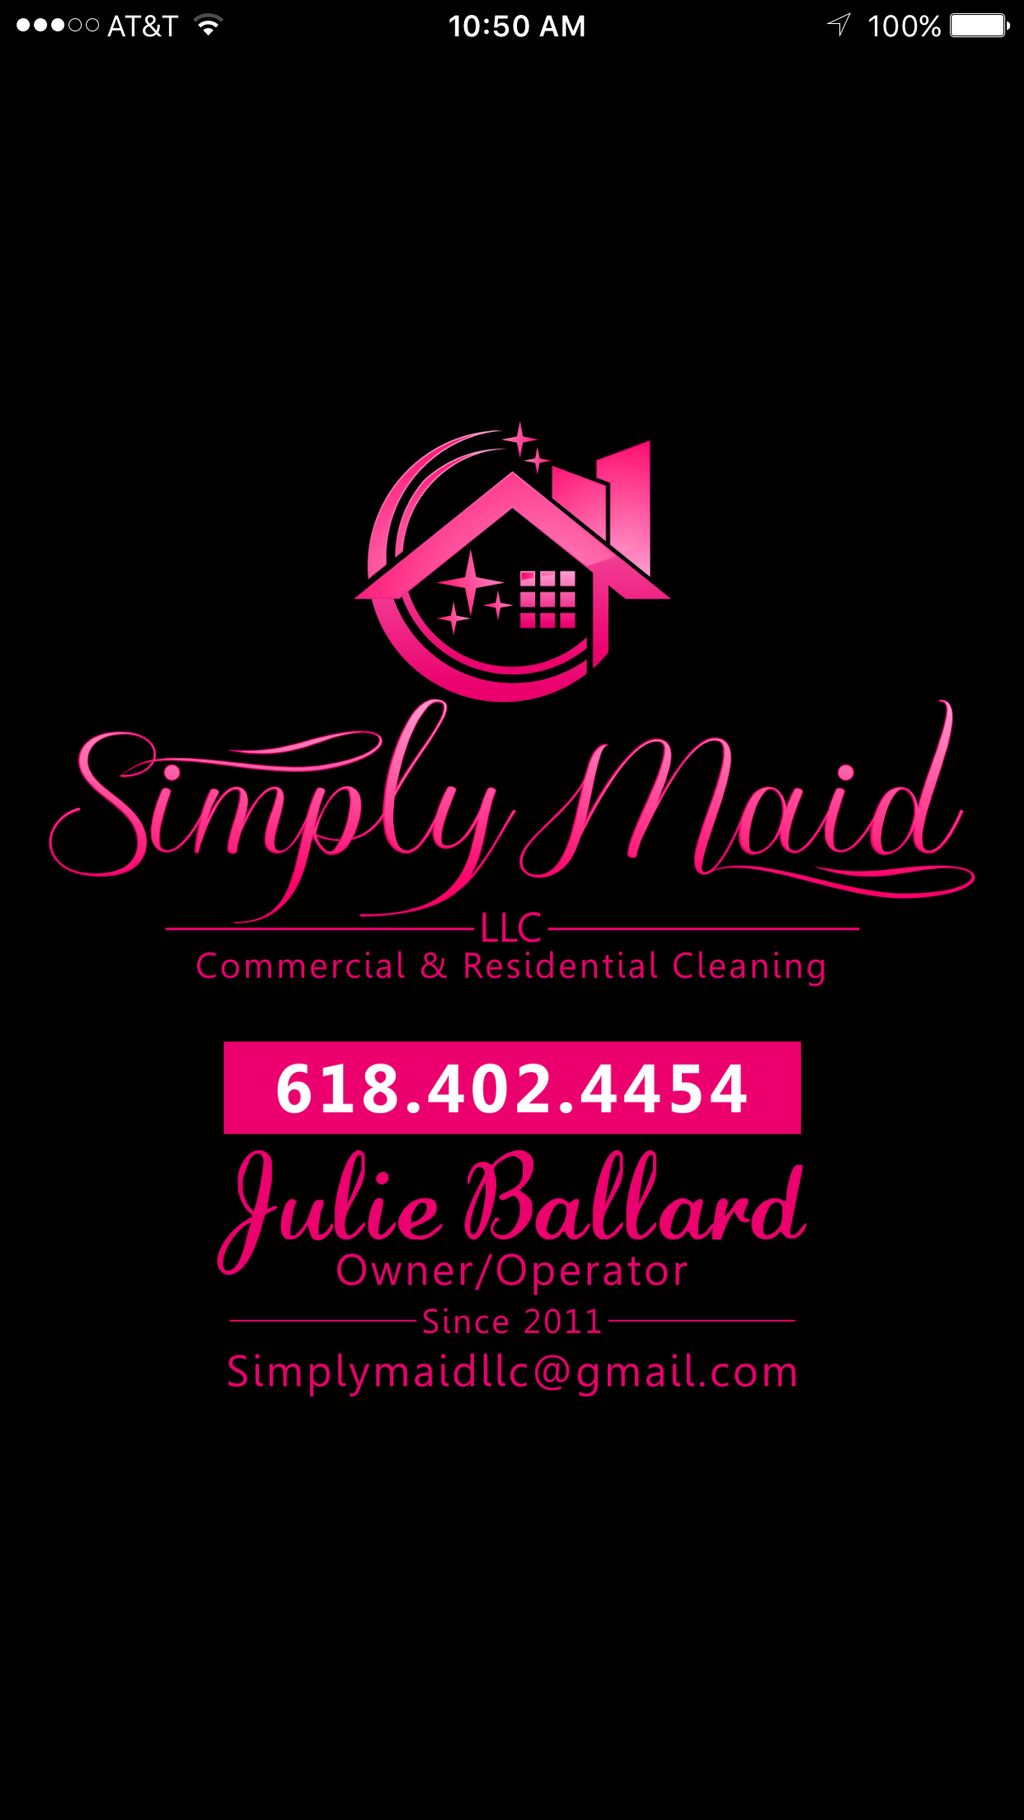 Simply Maid, LLC